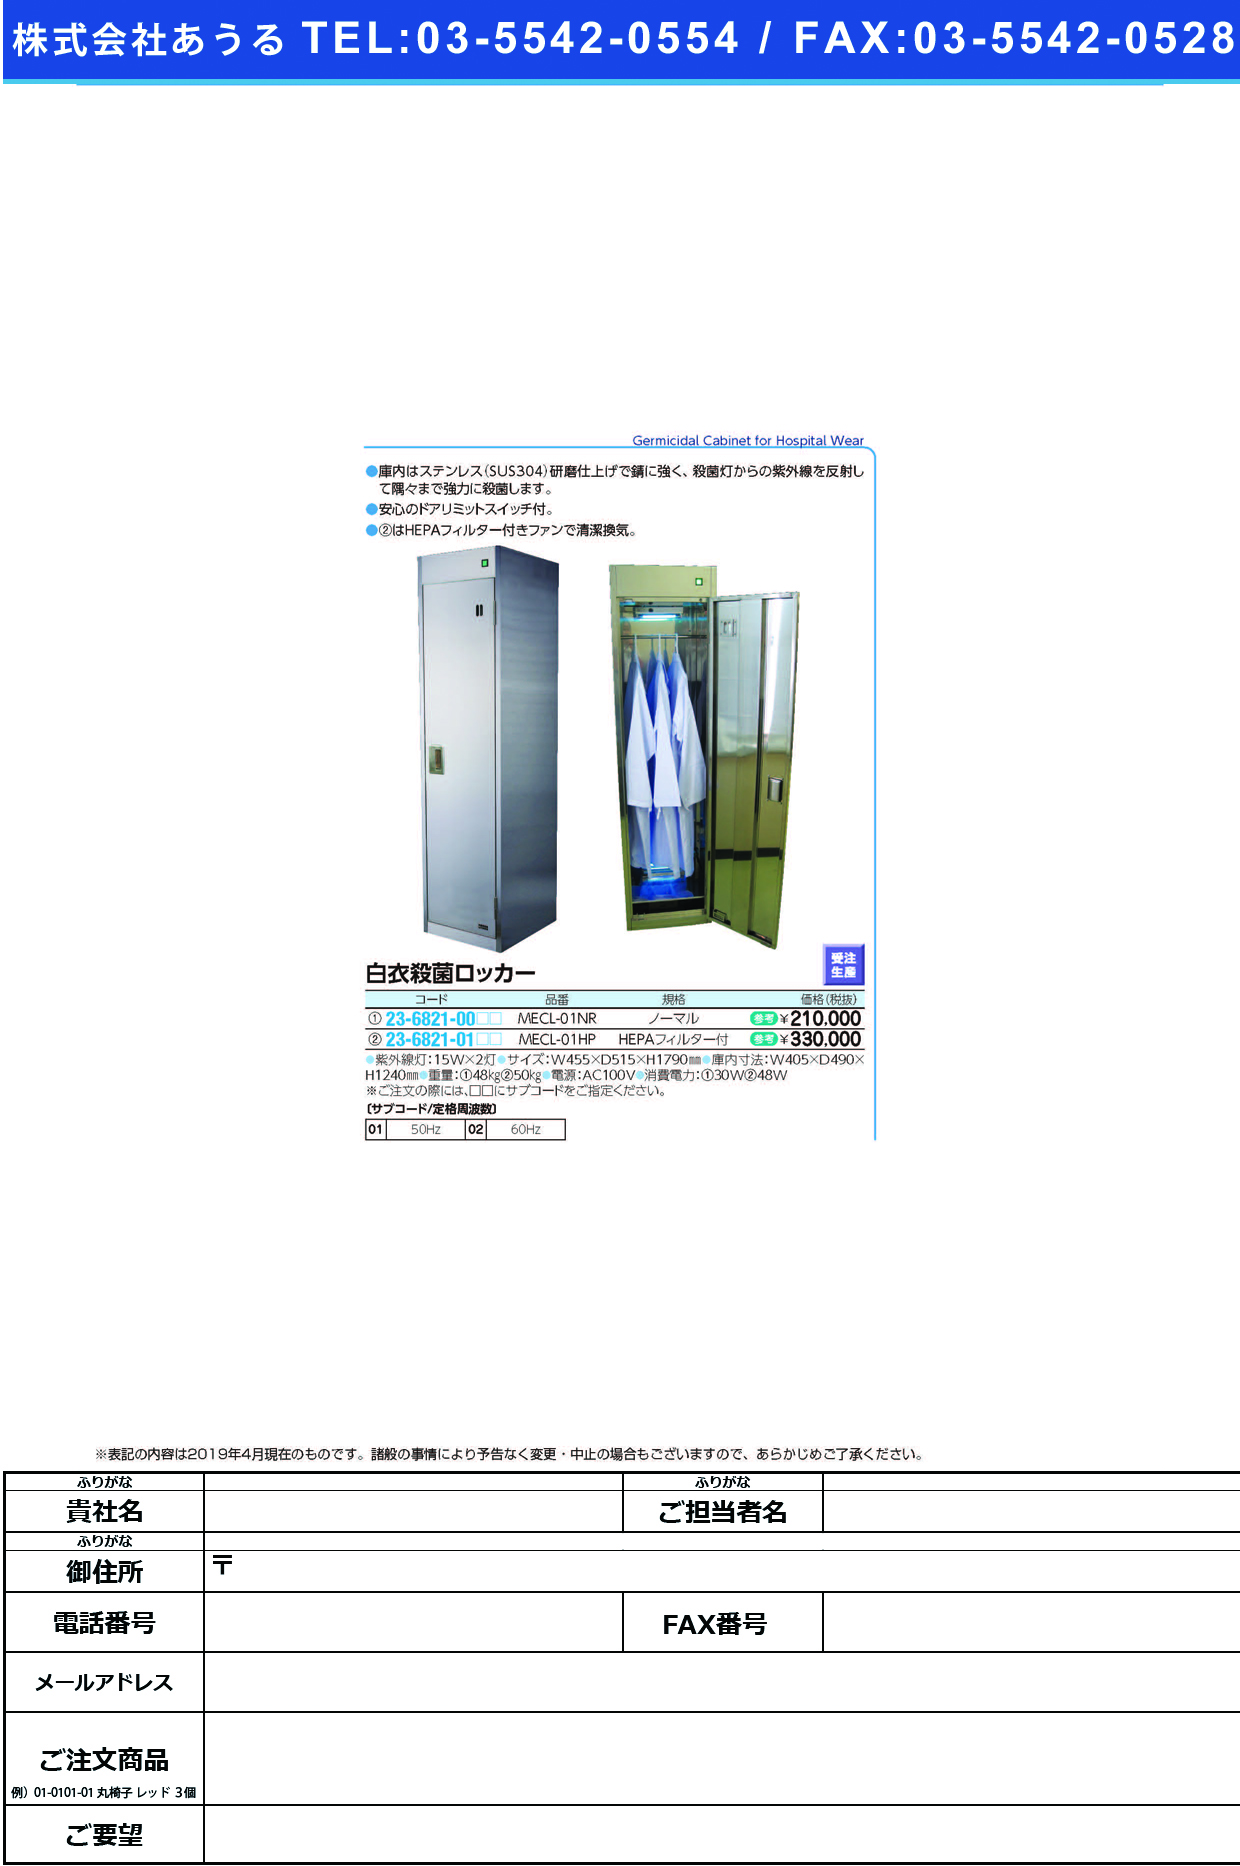 (23-6821-01)白衣殺菌ロッカー MECL-01HP(HEPAﾌｨﾙﾀｰ) ﾊｸｲｻｯｷﾝﾛｯｶｰ ５０Ｈｚ【1台単位】【2019年カタログ商品】